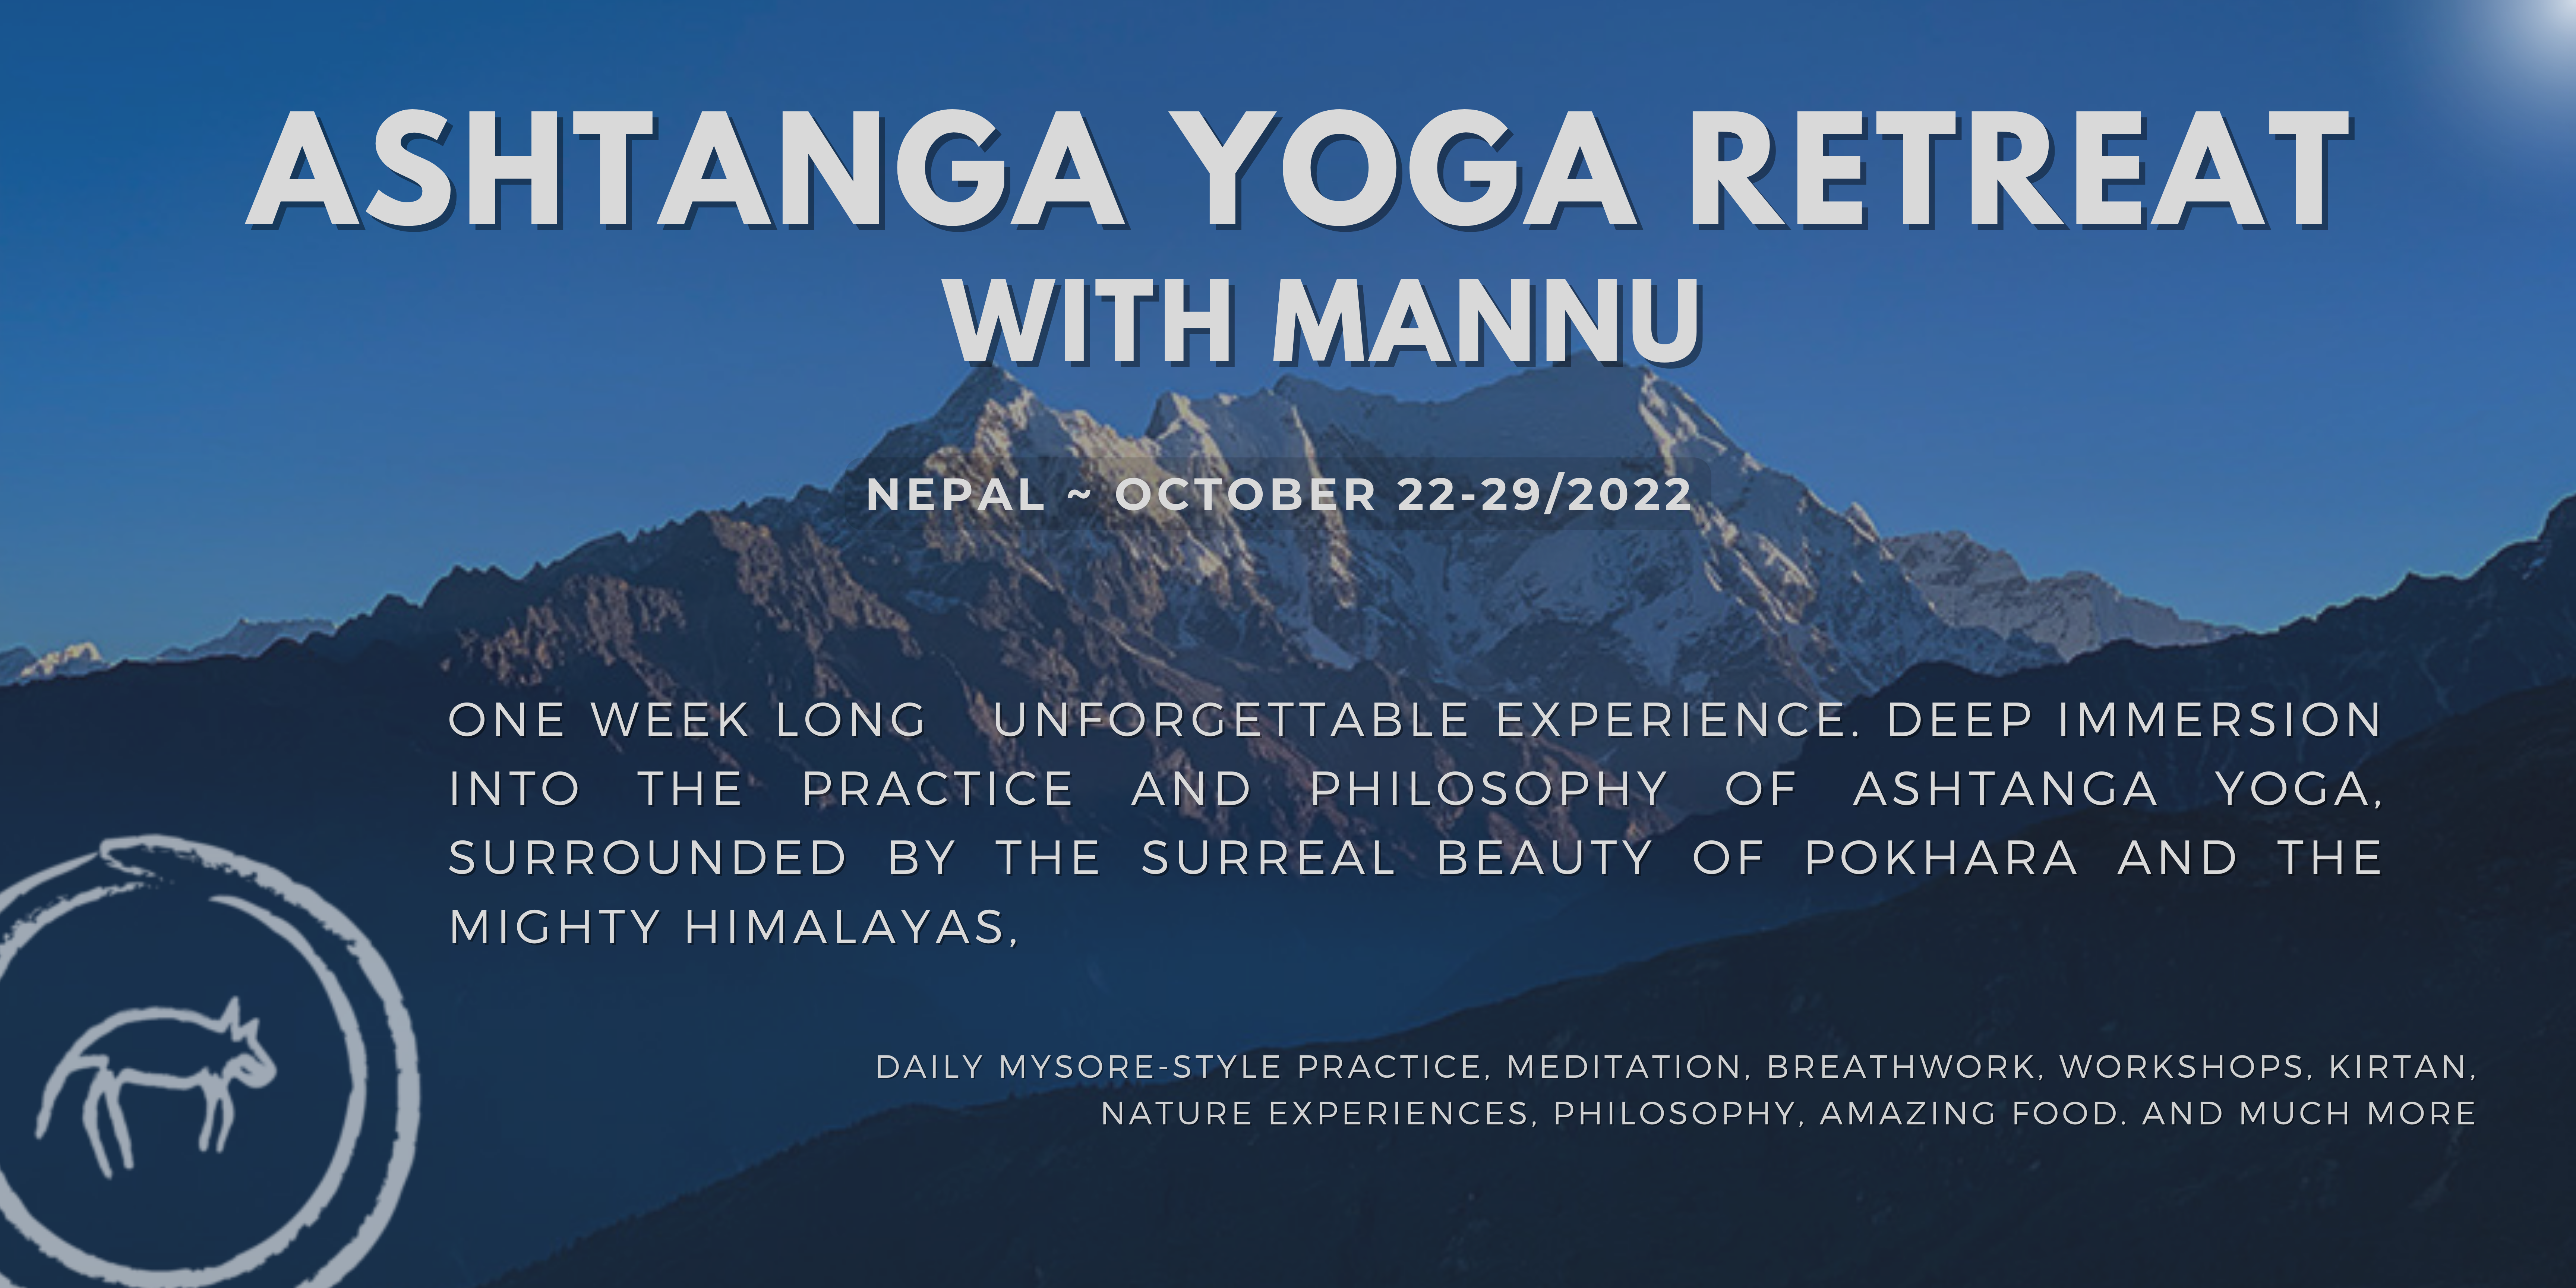 Ashtanga Yoga retreat Nepal Facebook banner